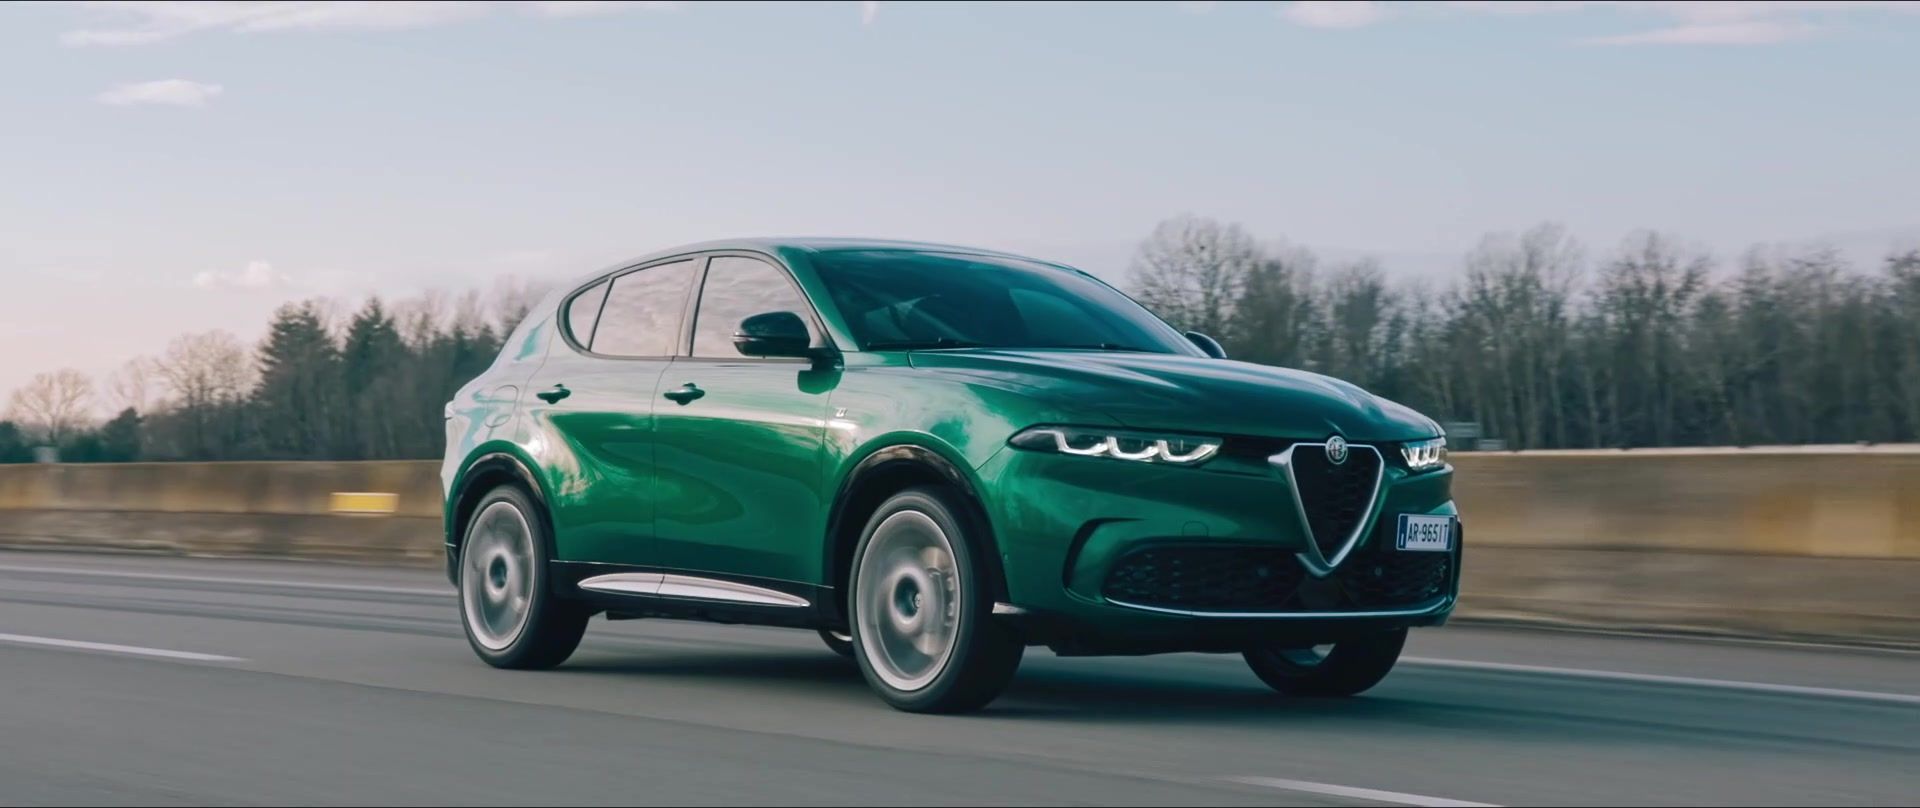 The new Alfa Romeo Tonale Driving Video in Montreal Green